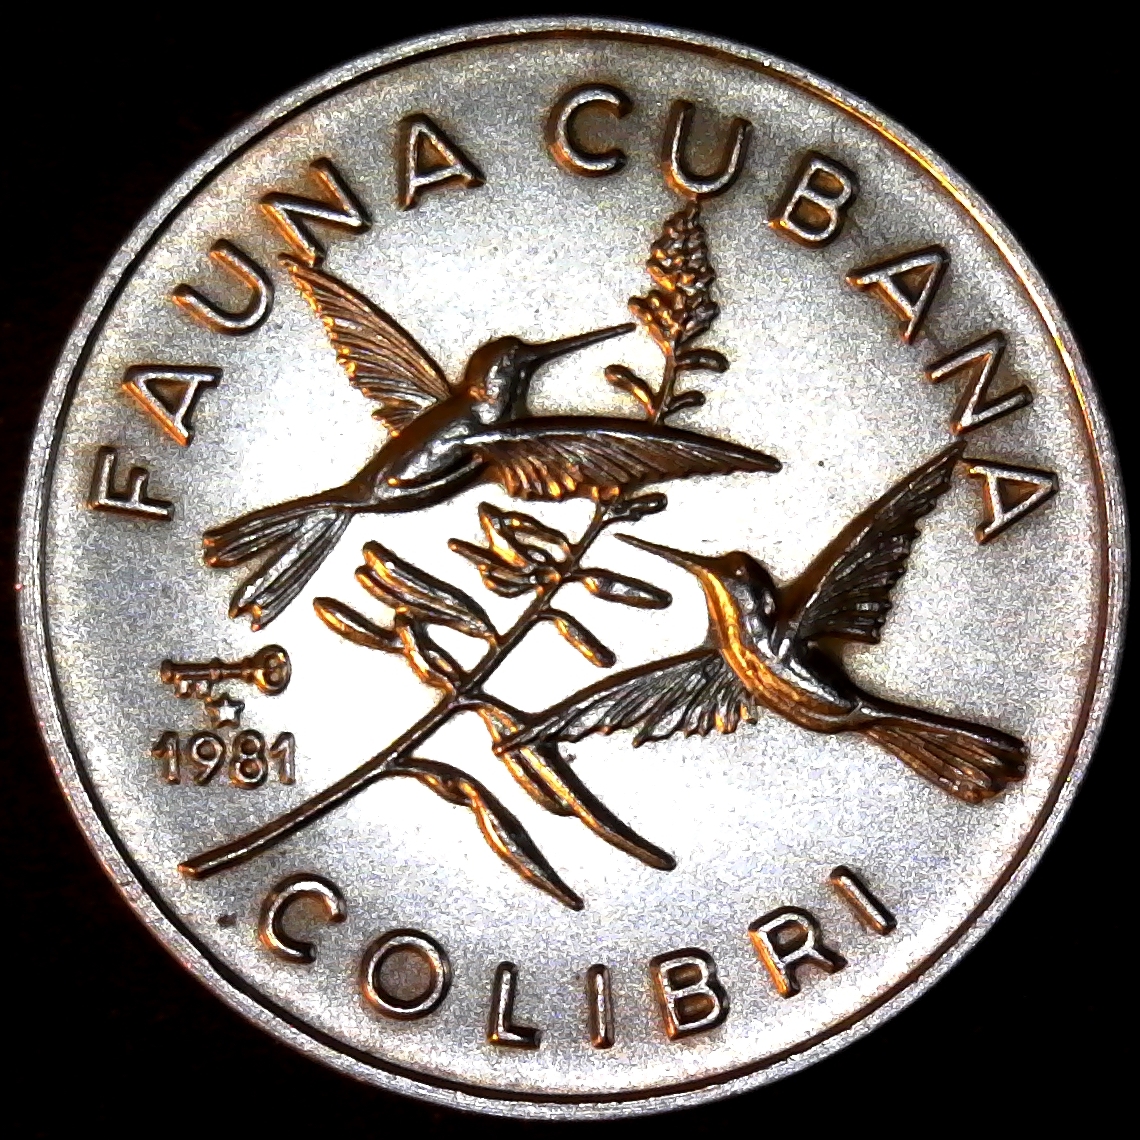 Cuba 1 Peso 1981 obverse.jpg